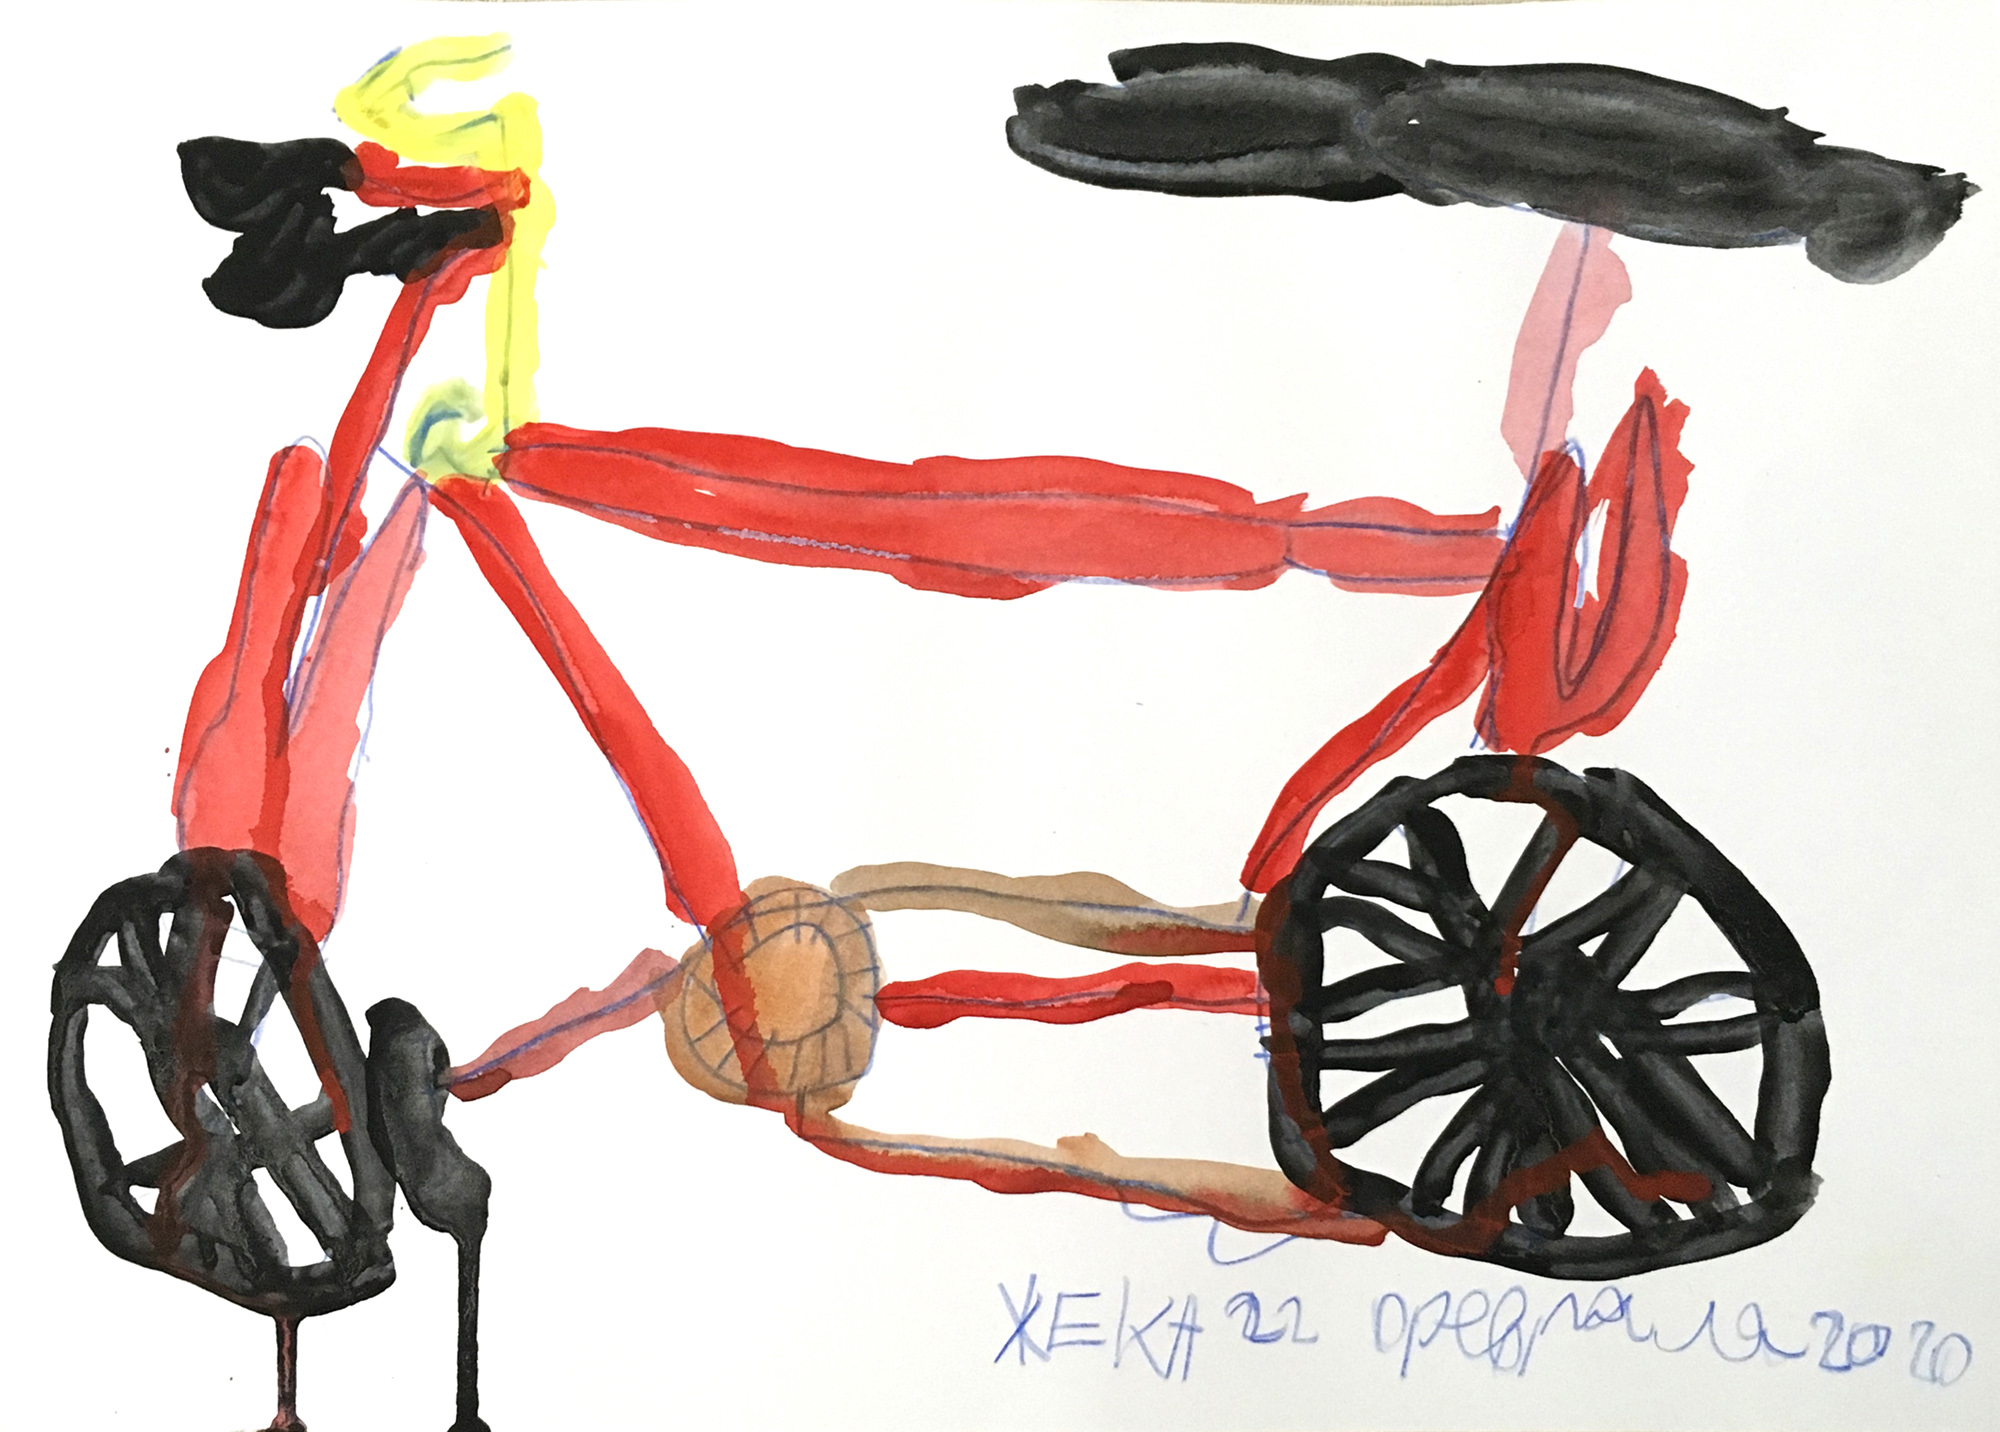 Yevhen Holubentsev A3 Bicycle